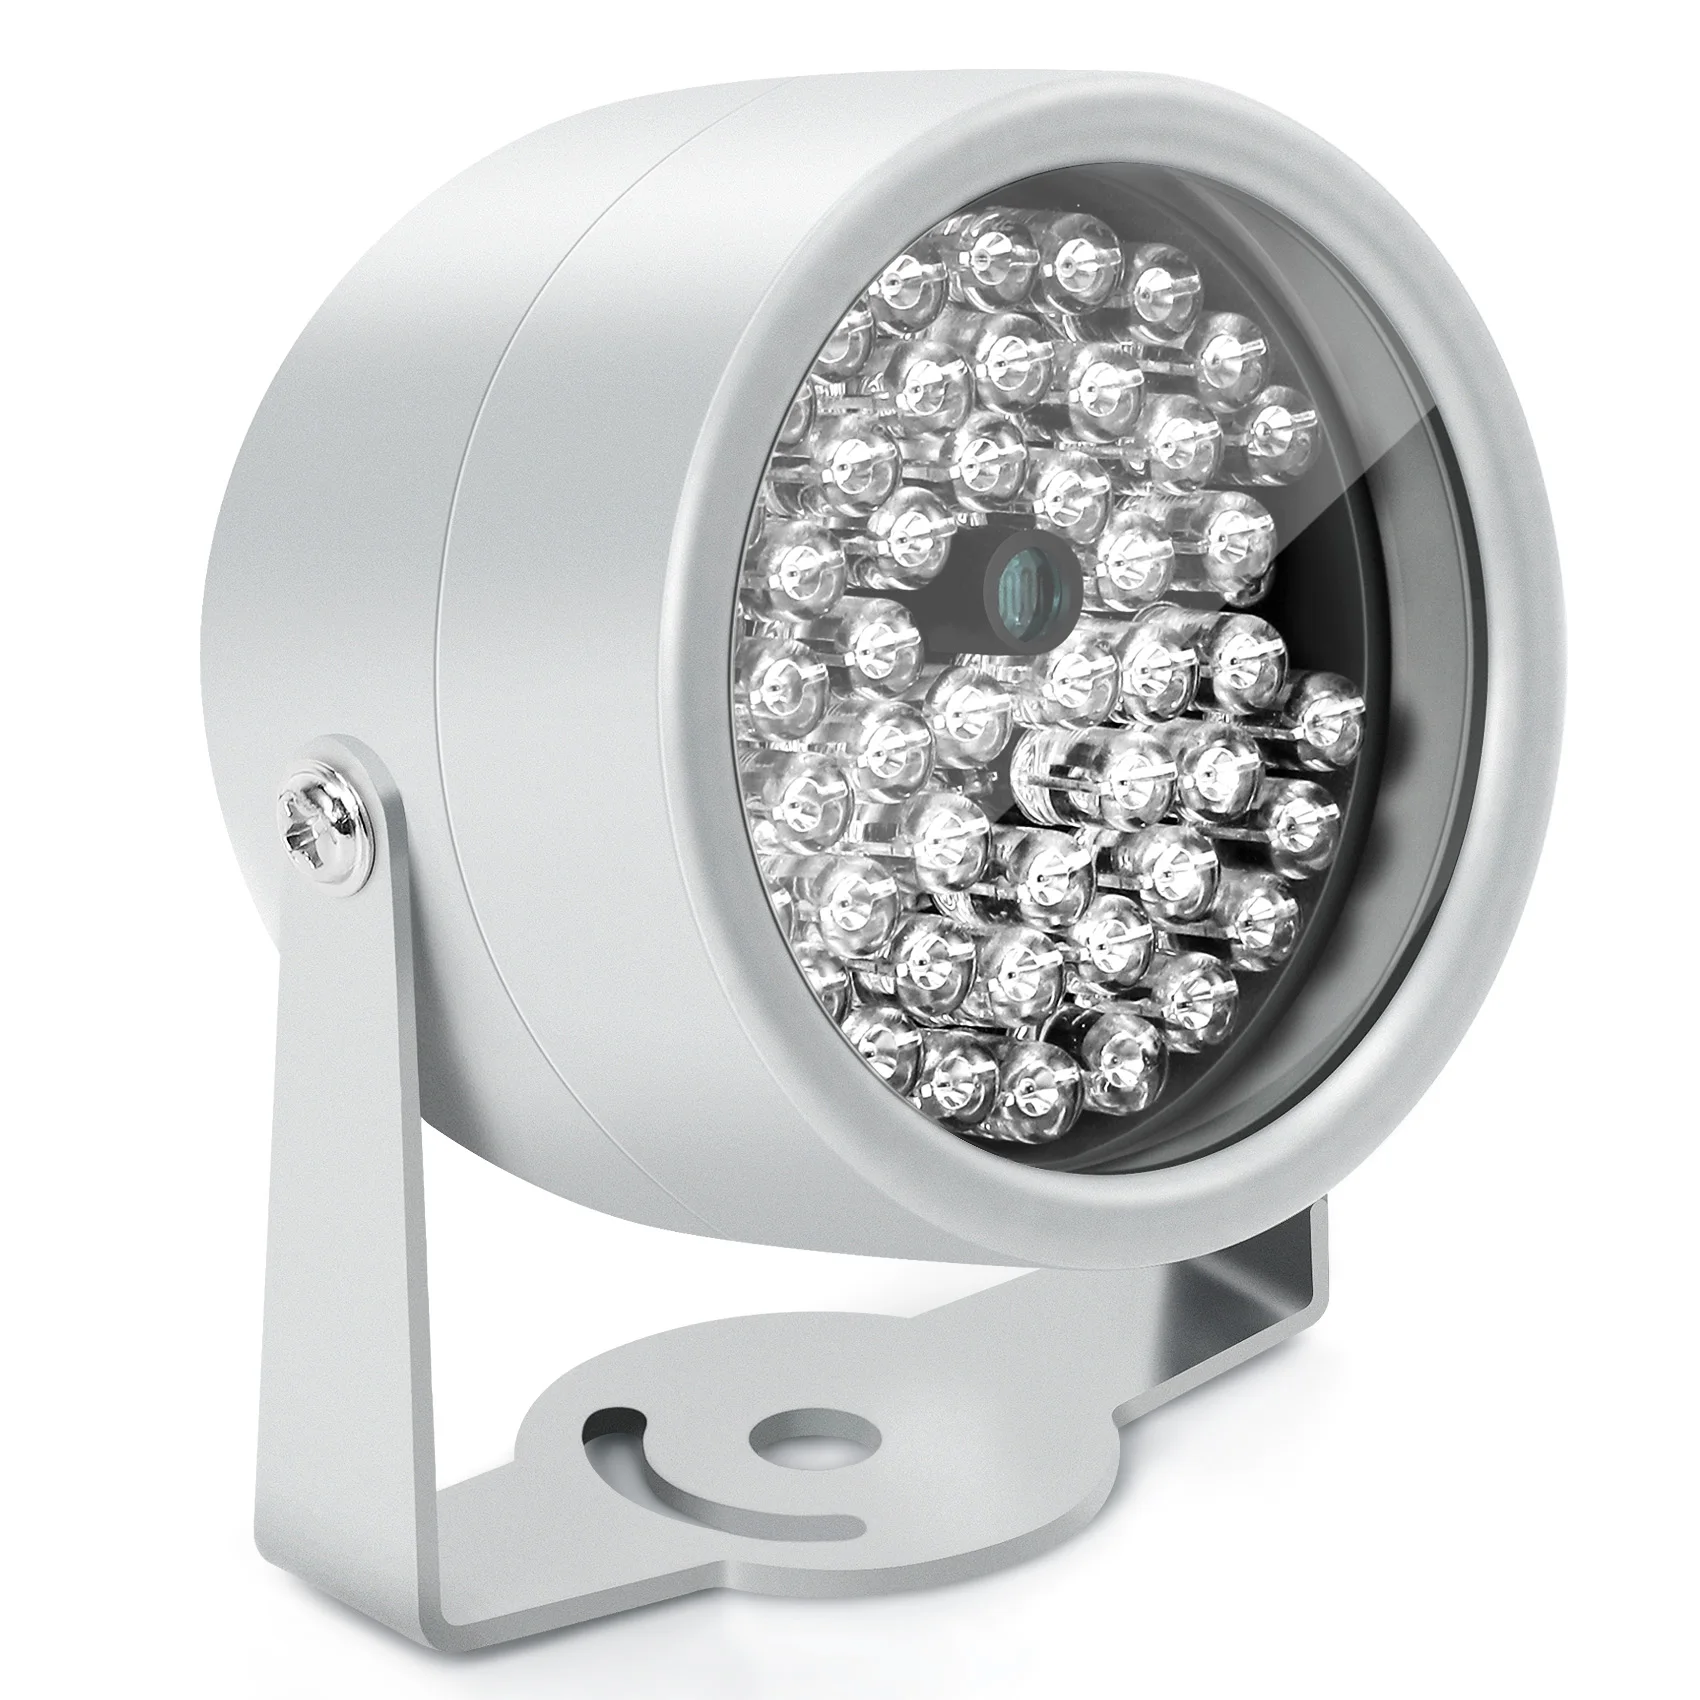 

48 LED IR Infrared Night Vision Security Camera CCTV Camera DC12V Silver